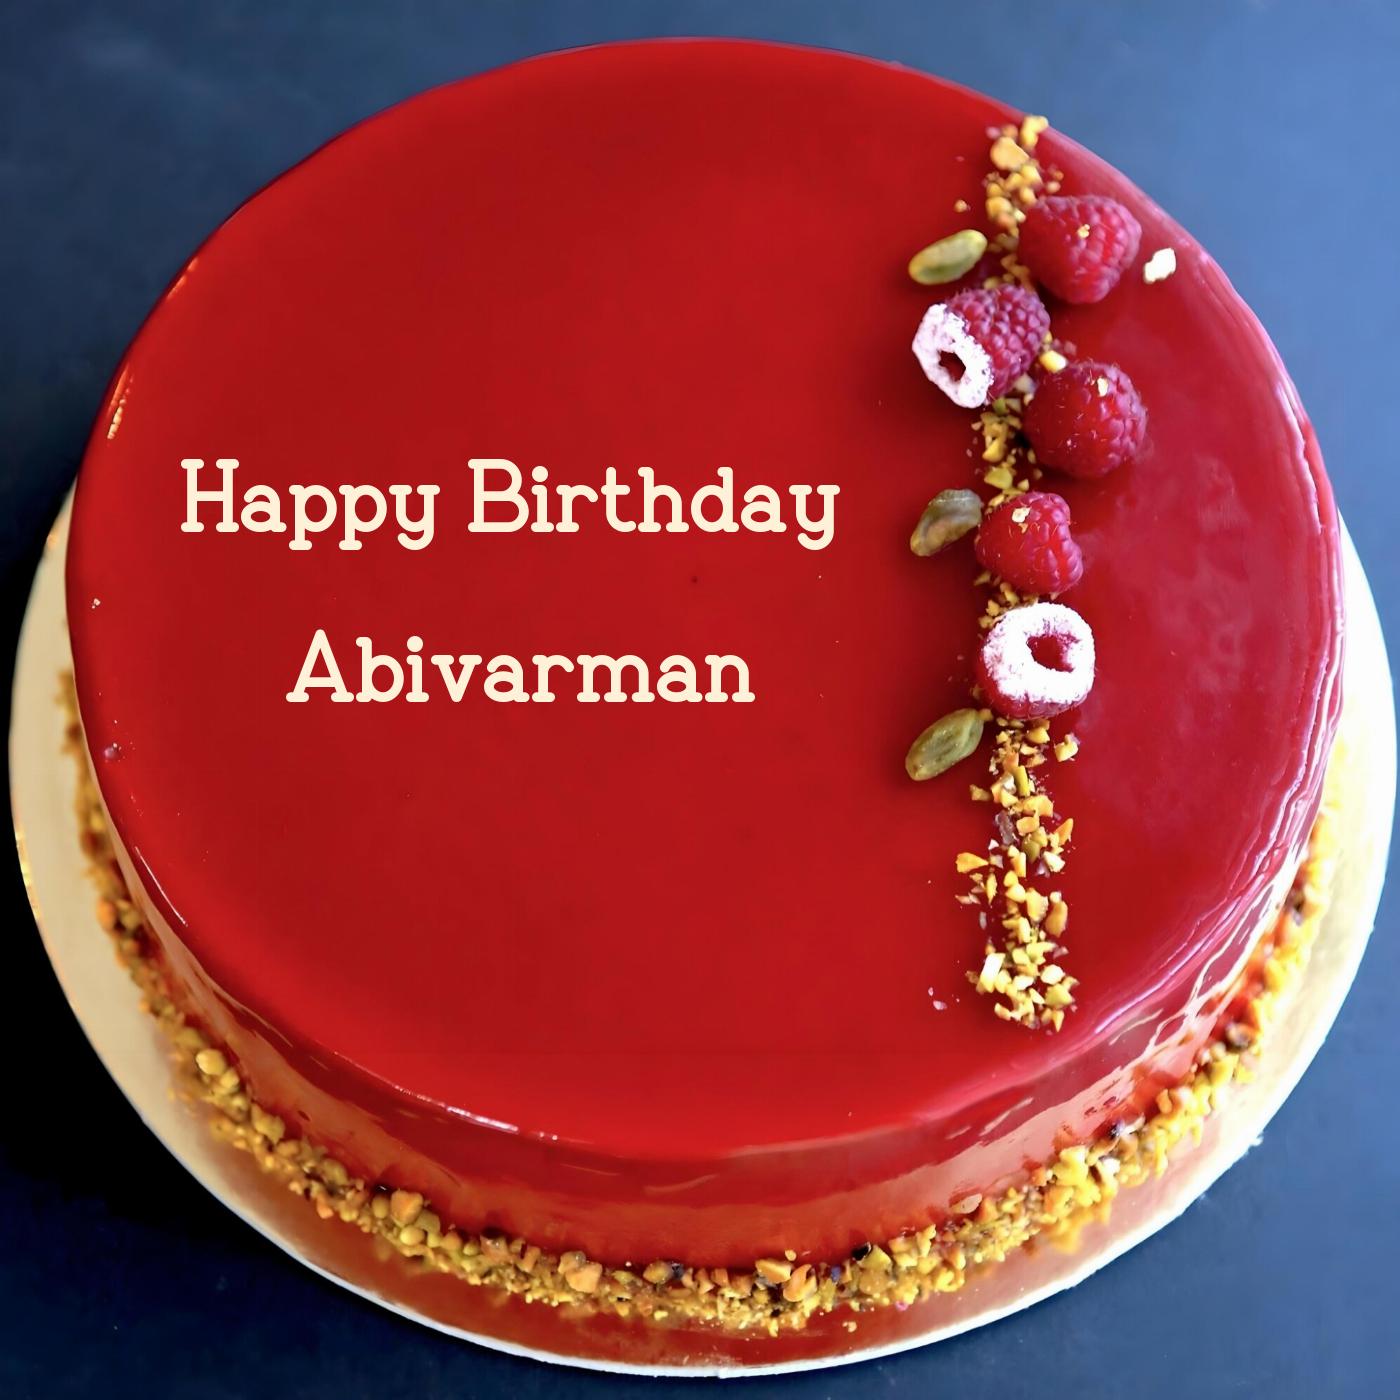 Happy Birthday Abivarman Red Raspberry Cake